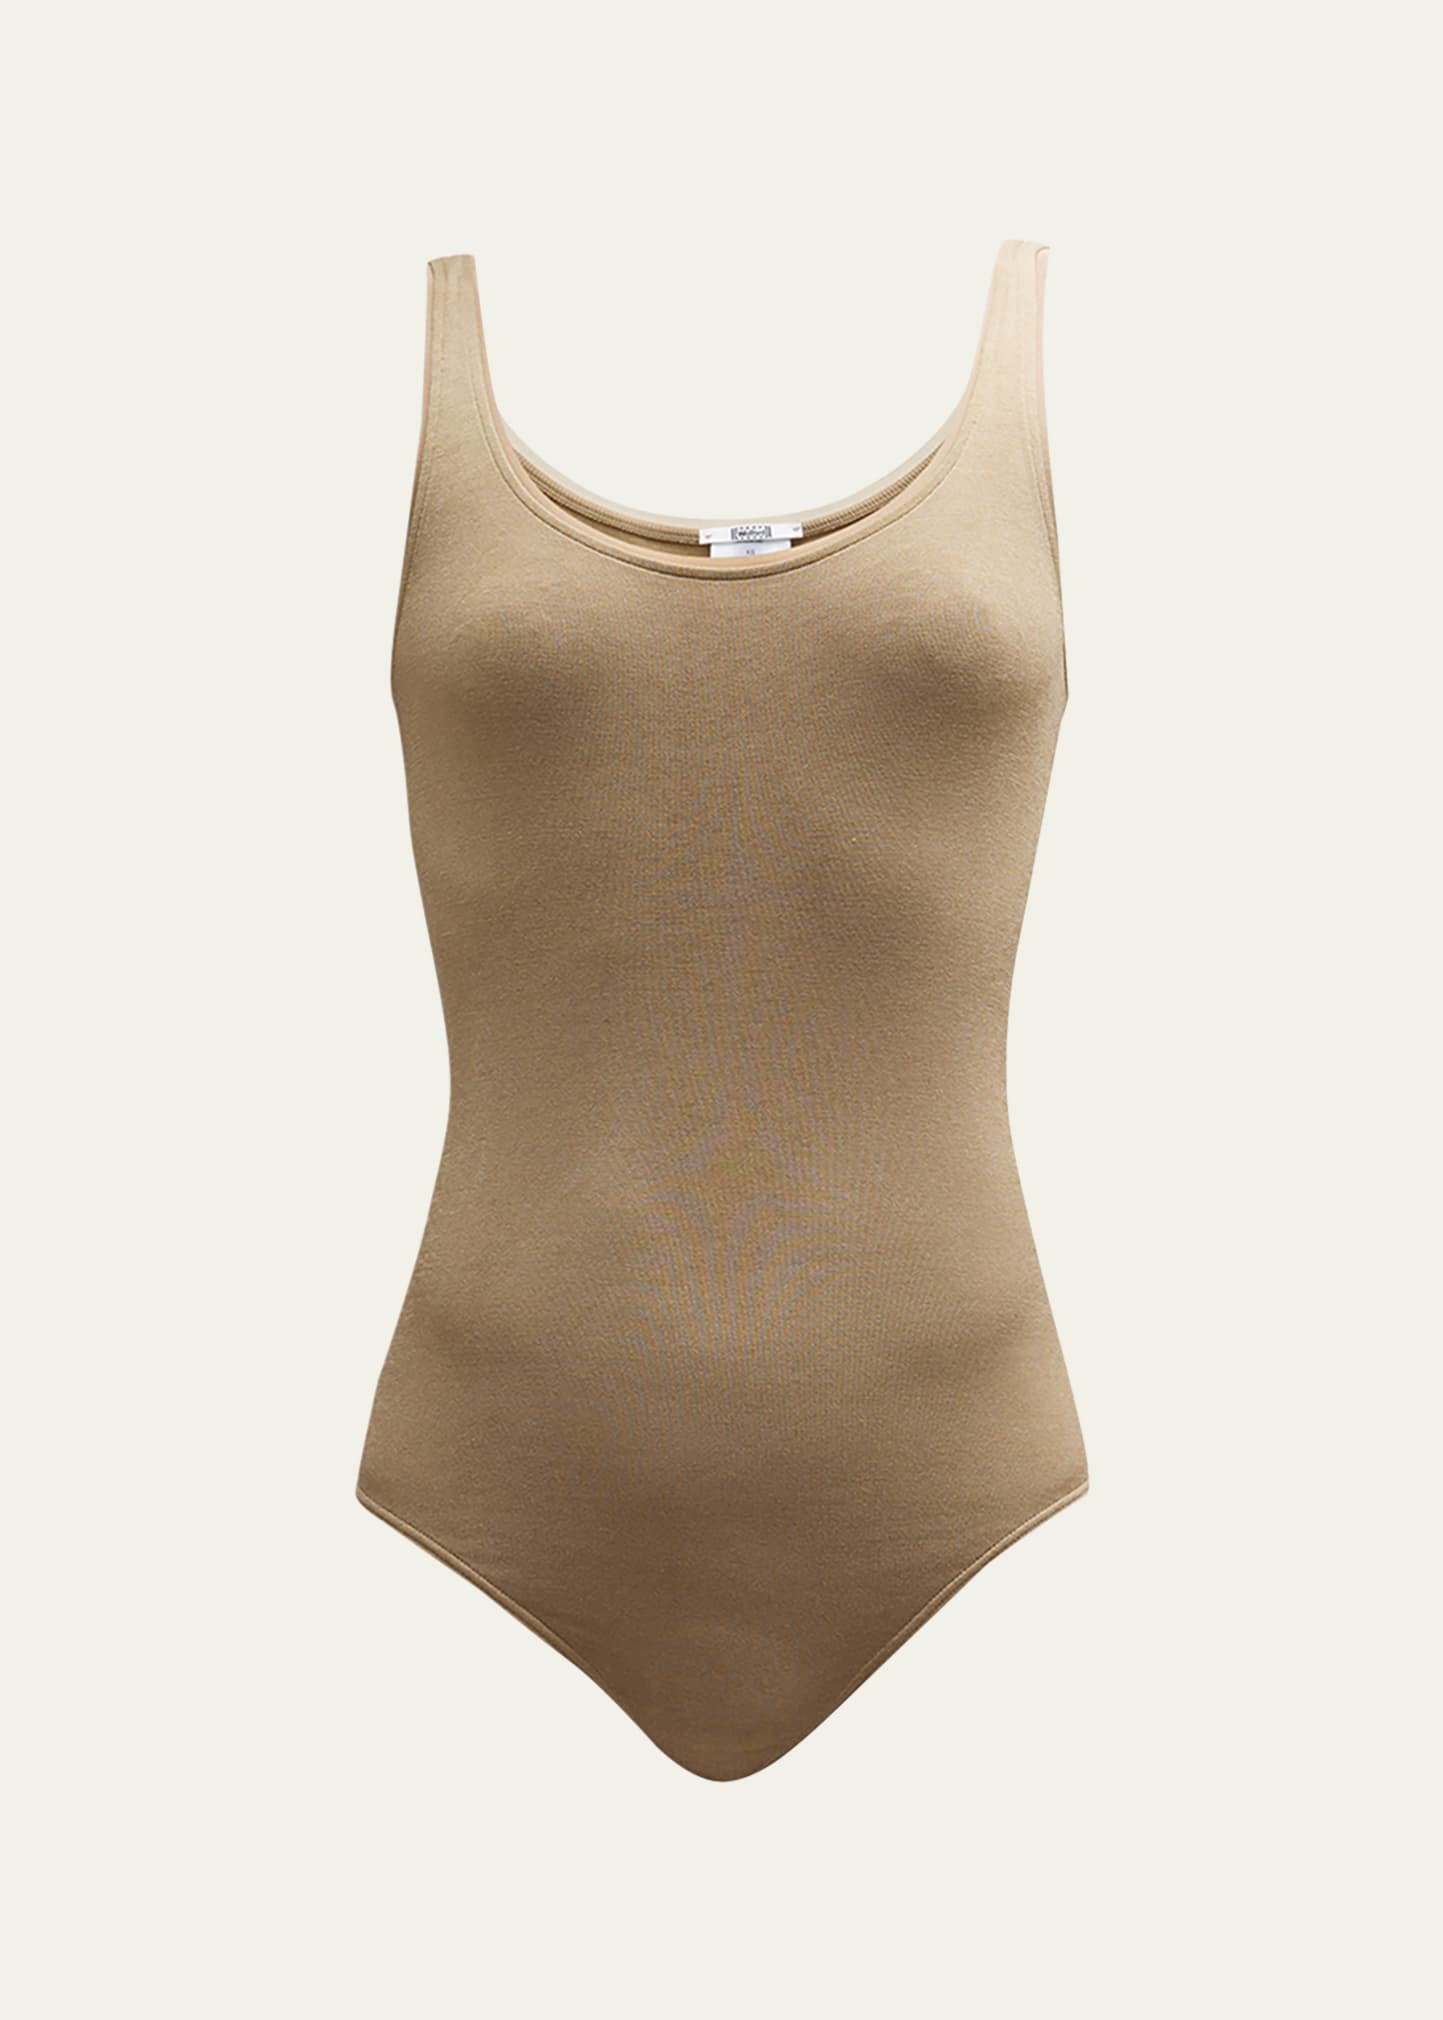 Wolford Alida Cutout Turtleneck Bodysuit - Bergdorf Goodman